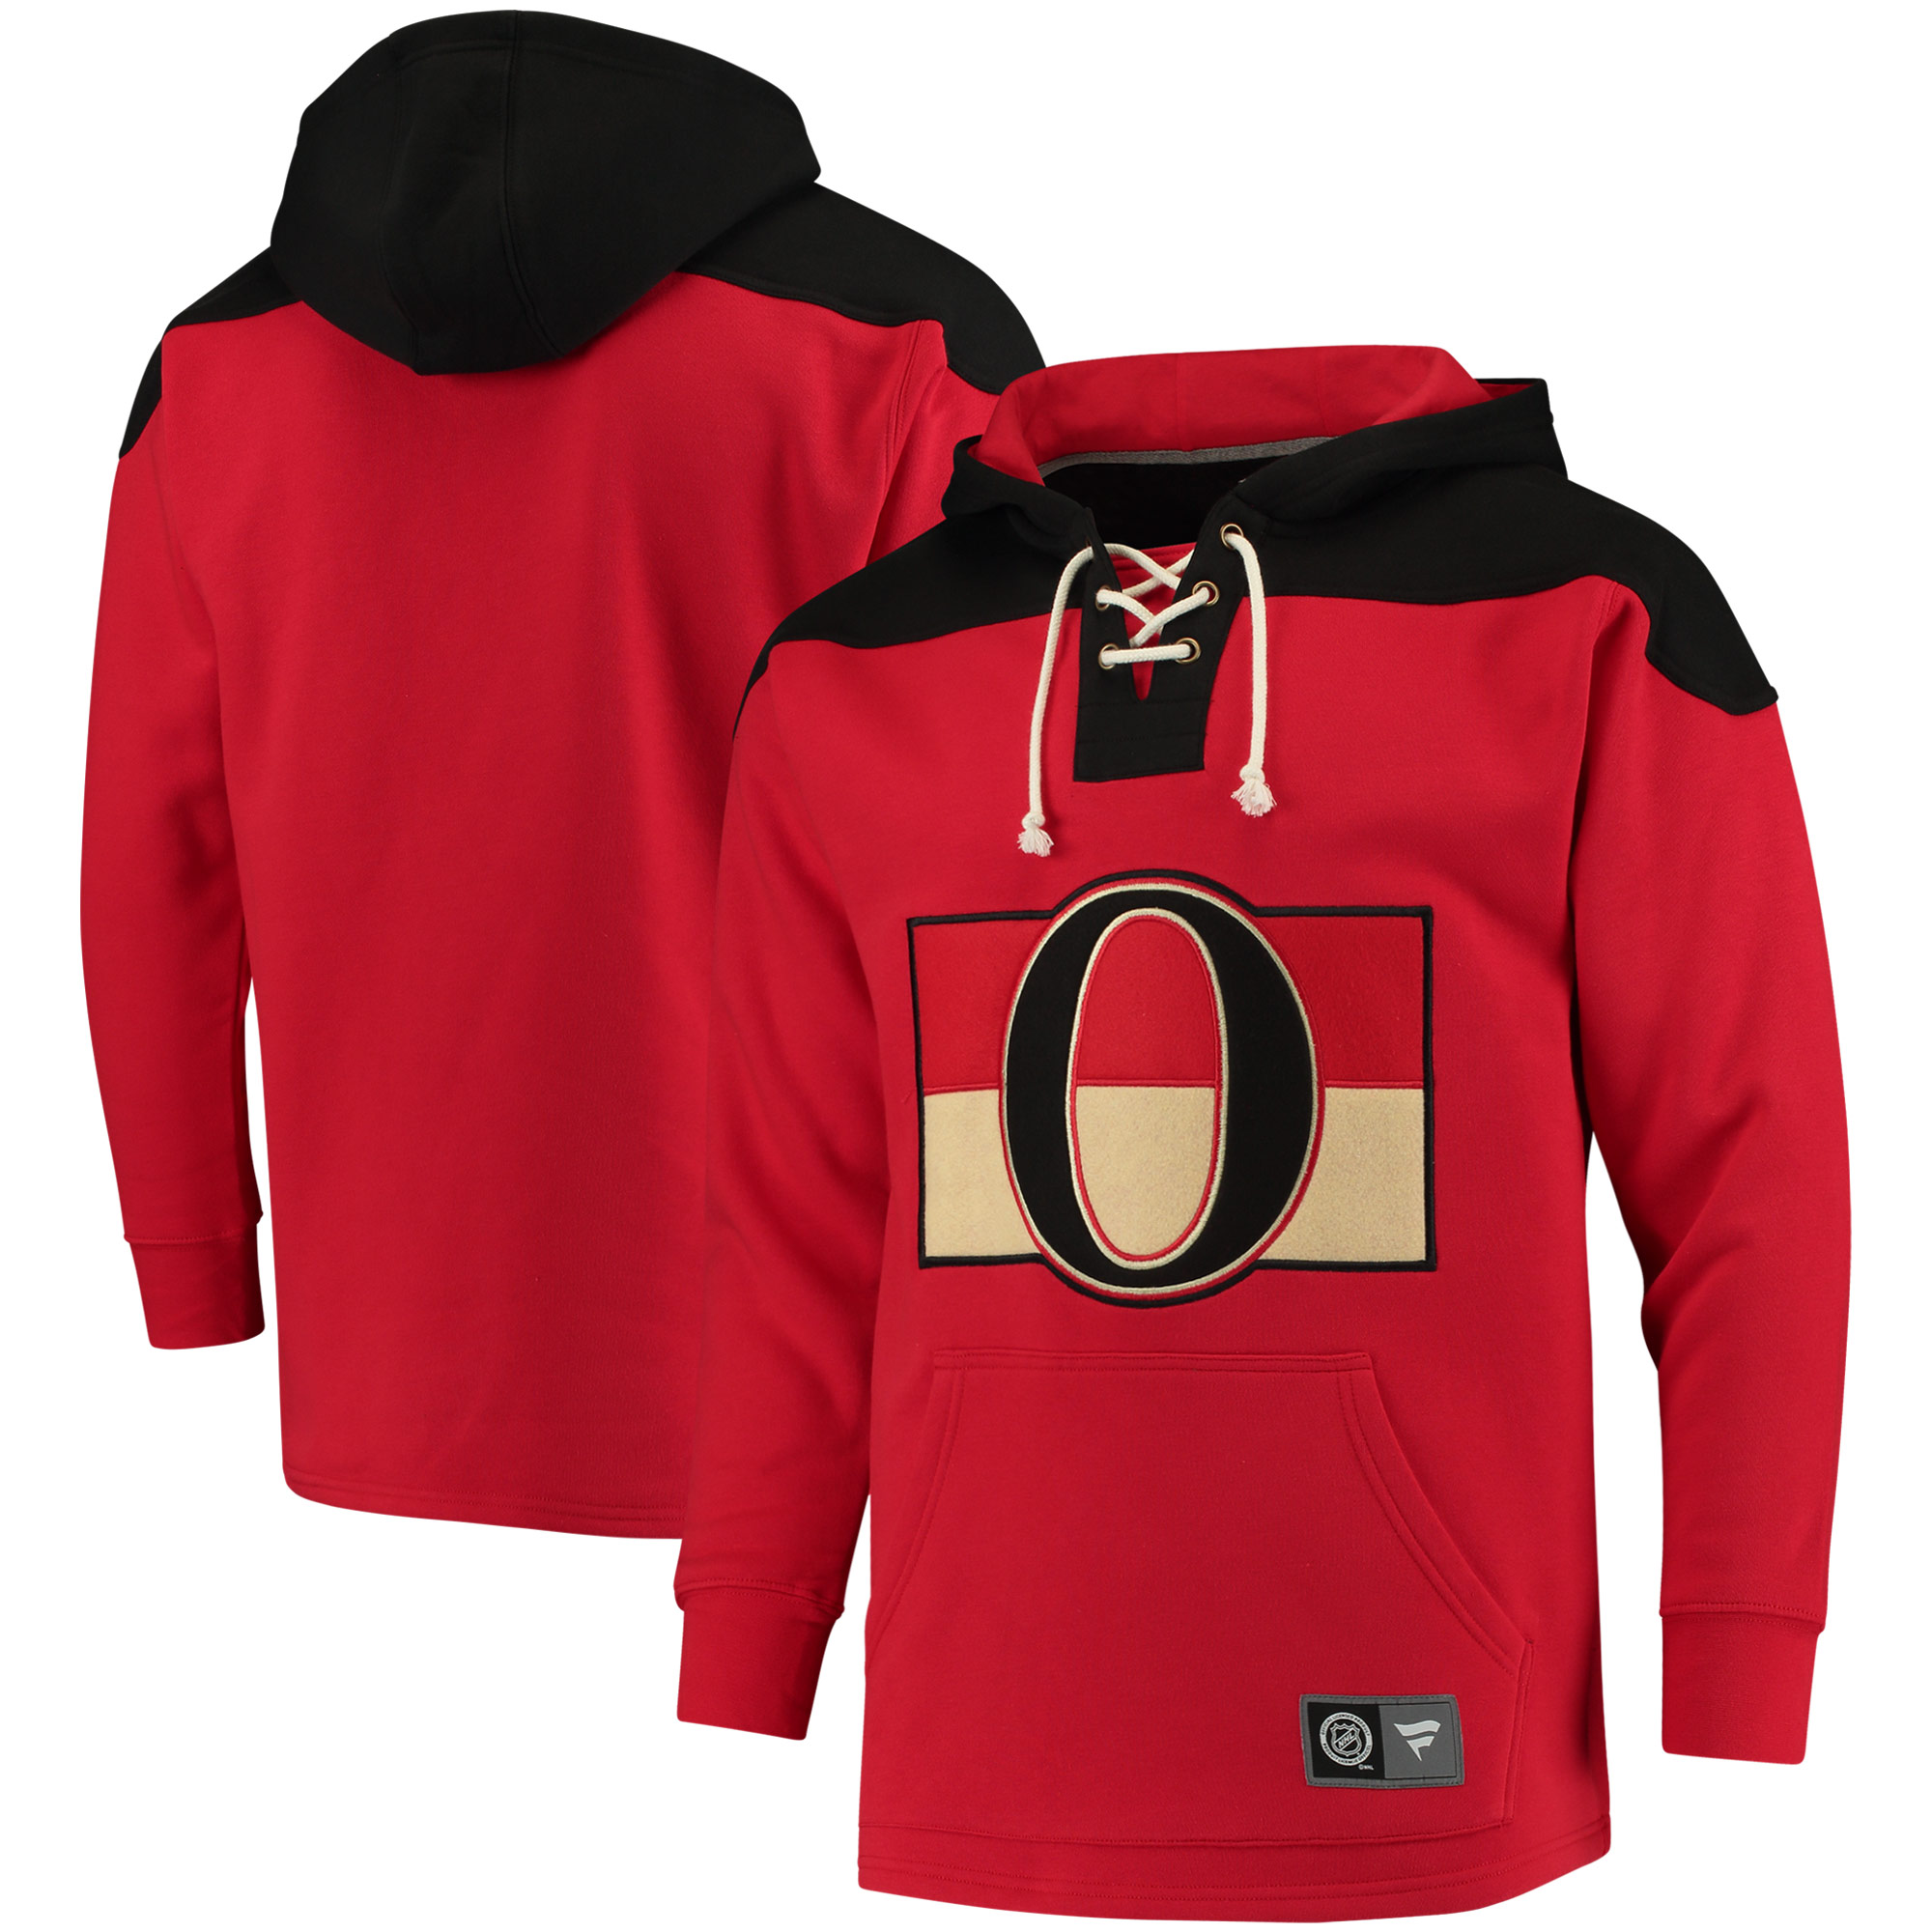 Men's Ottawa Senators Fanatics Branded Red/Black Breakaway Lace Up Hoodie